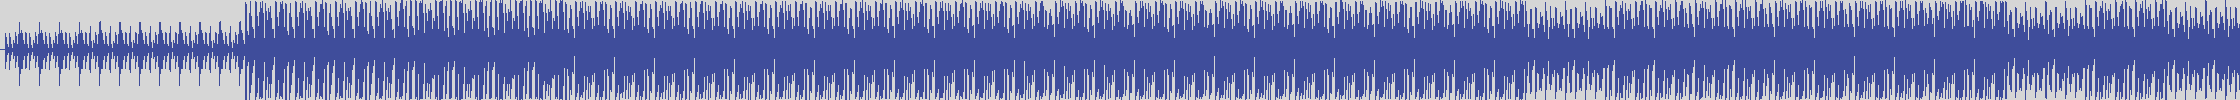 atomic_recordings [AR007] Roger Vergil - Oblivious [Original Mix] audio wave form